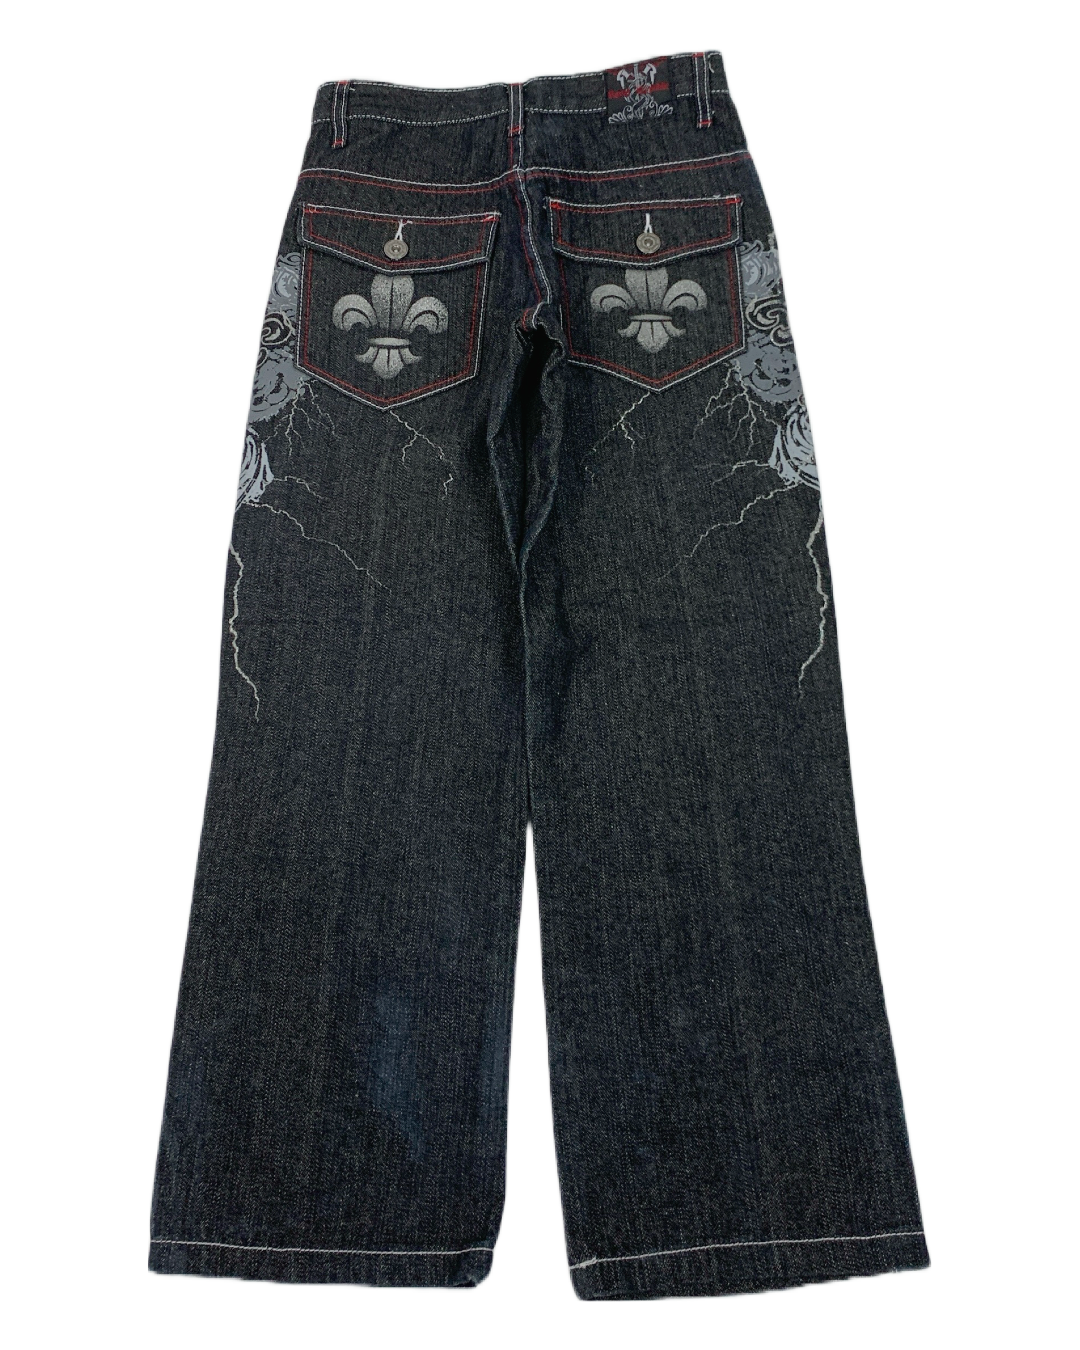 Royal Republic All Overprint Vintage Jeans - 18